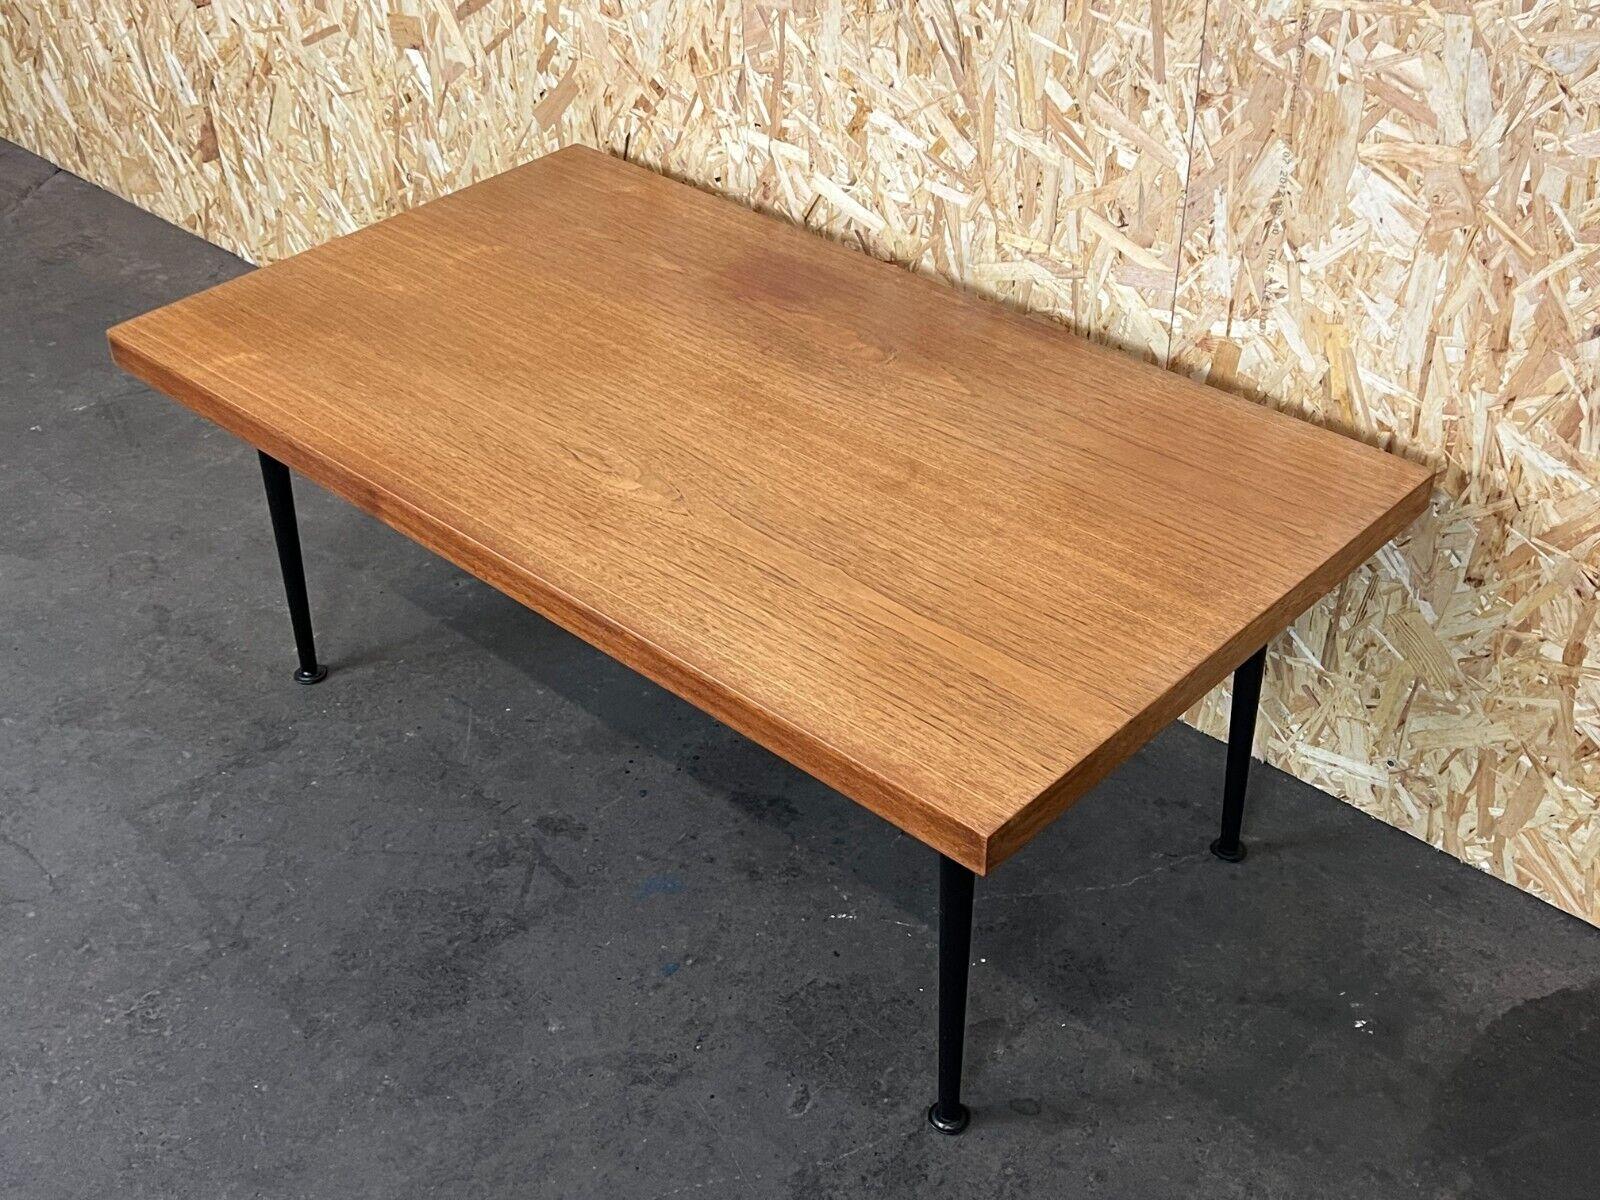 1960s-1970s Teak Coffee Table Side Table Ilse Möbel Danish Modern Design For Sale 2